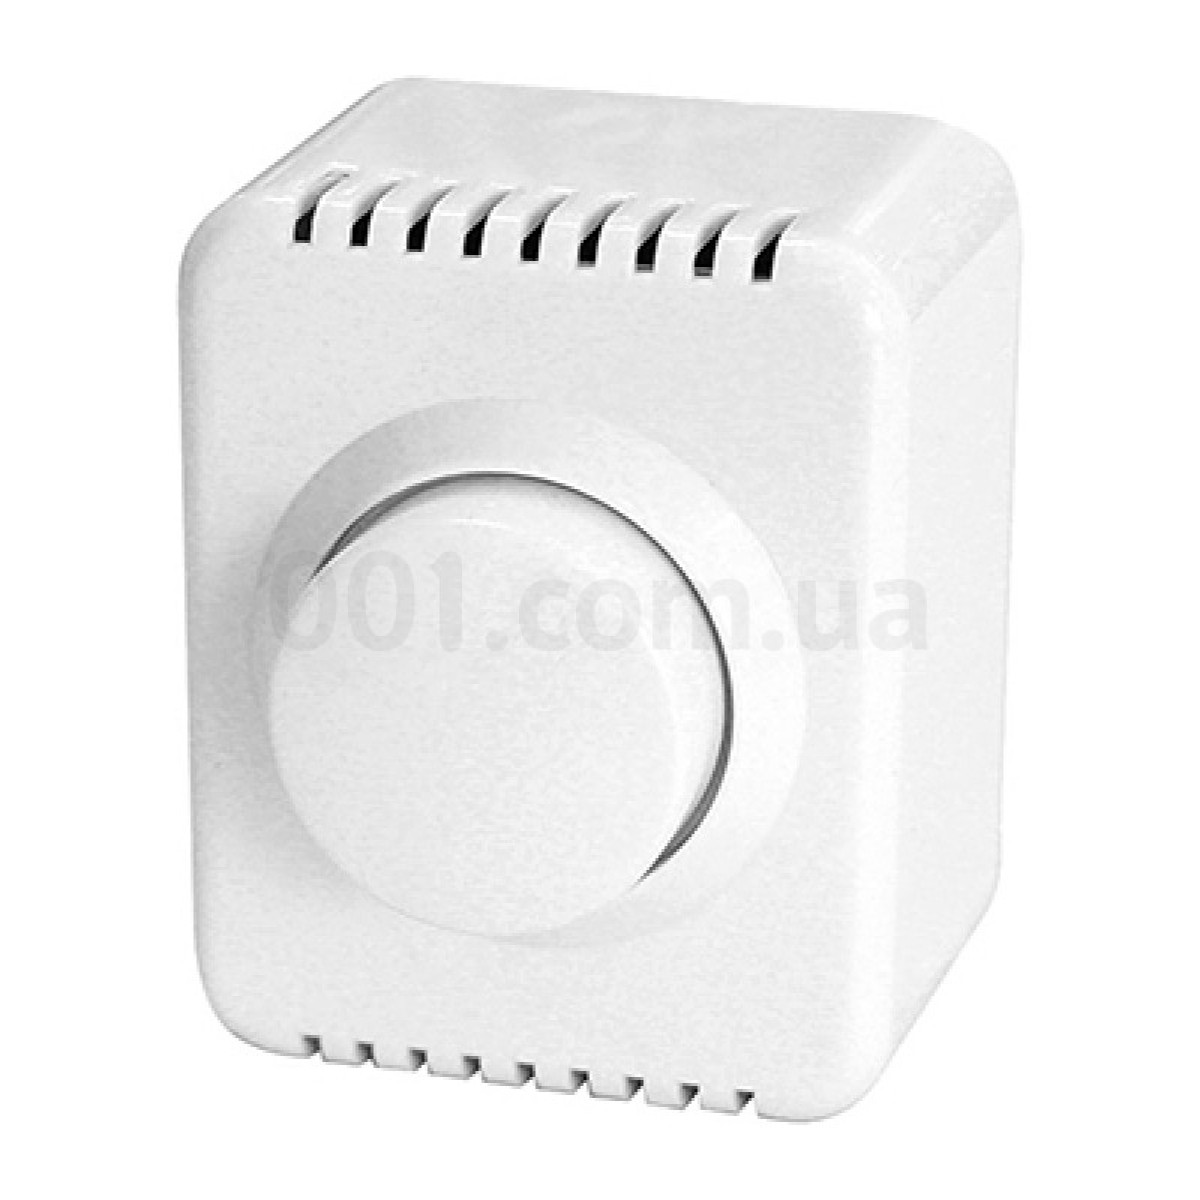 Светорегулятор (диммер) 500 Вт для внешнего монтажа белый e.touch.1311.w серия e.touch, E.NEXT 256_256.jpg